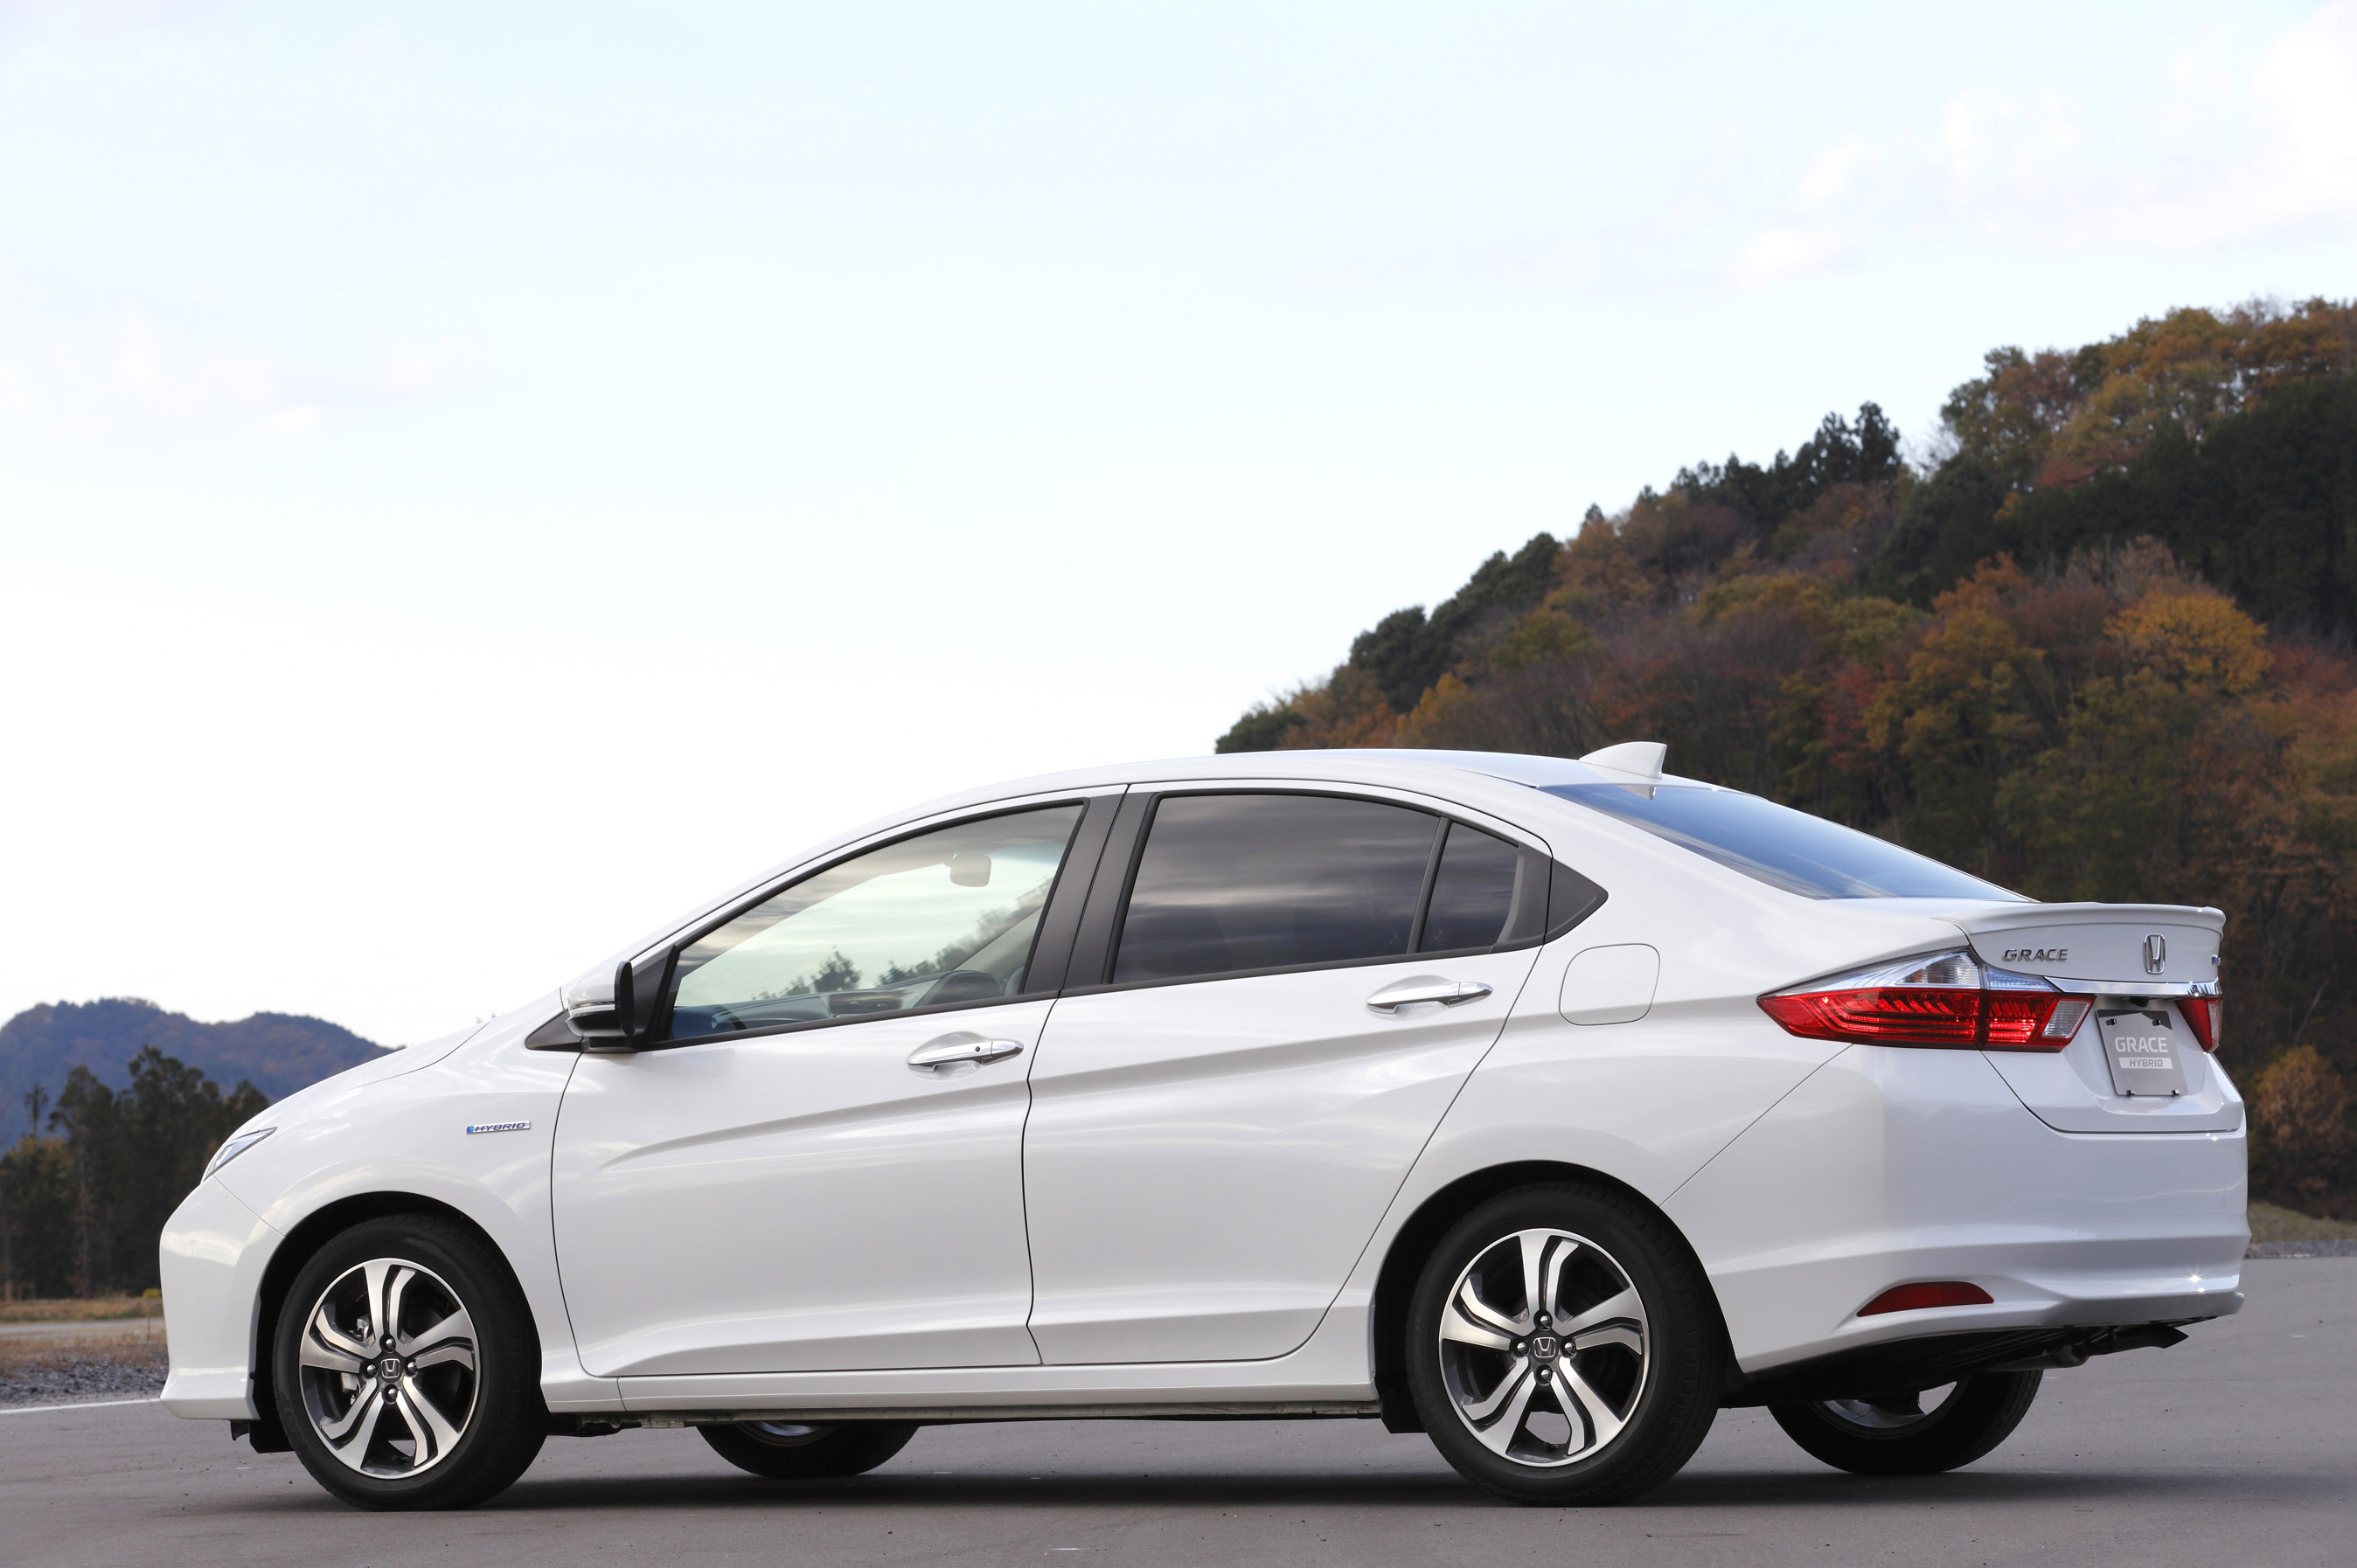 Honda Introduces Most Efficient Hybrid Sedan Named "Grace"